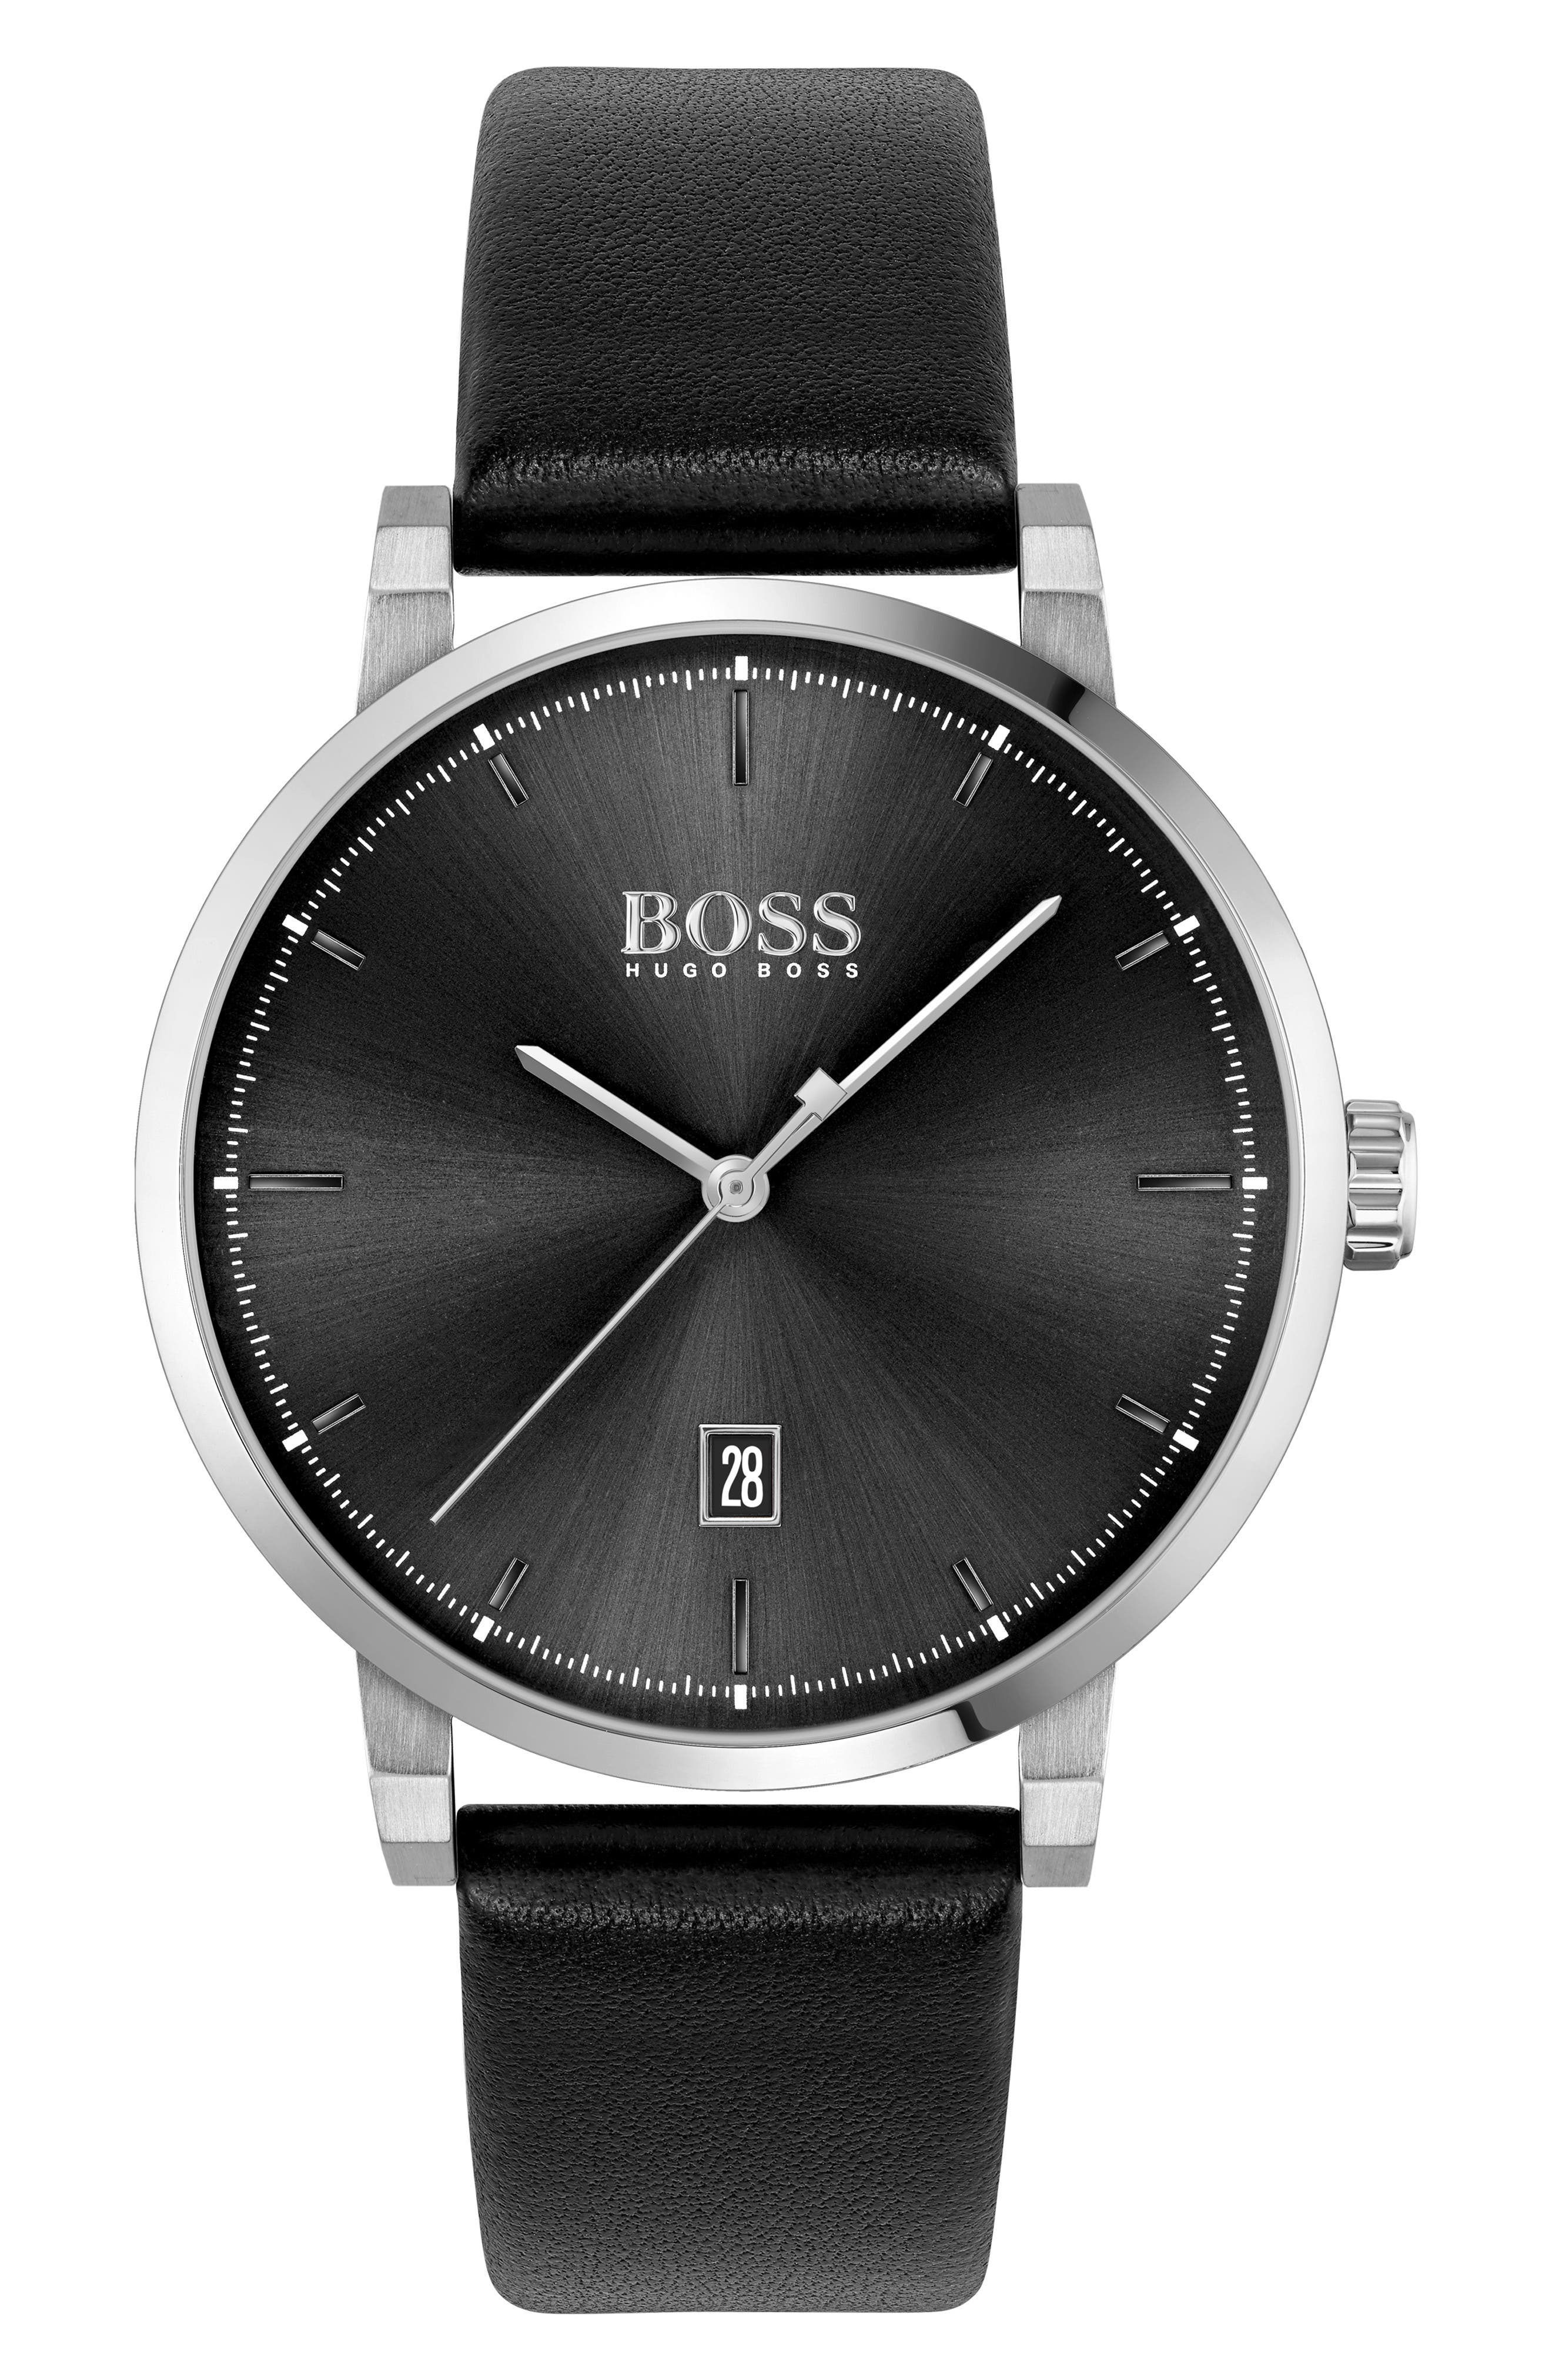 boss hugo boss watch mens